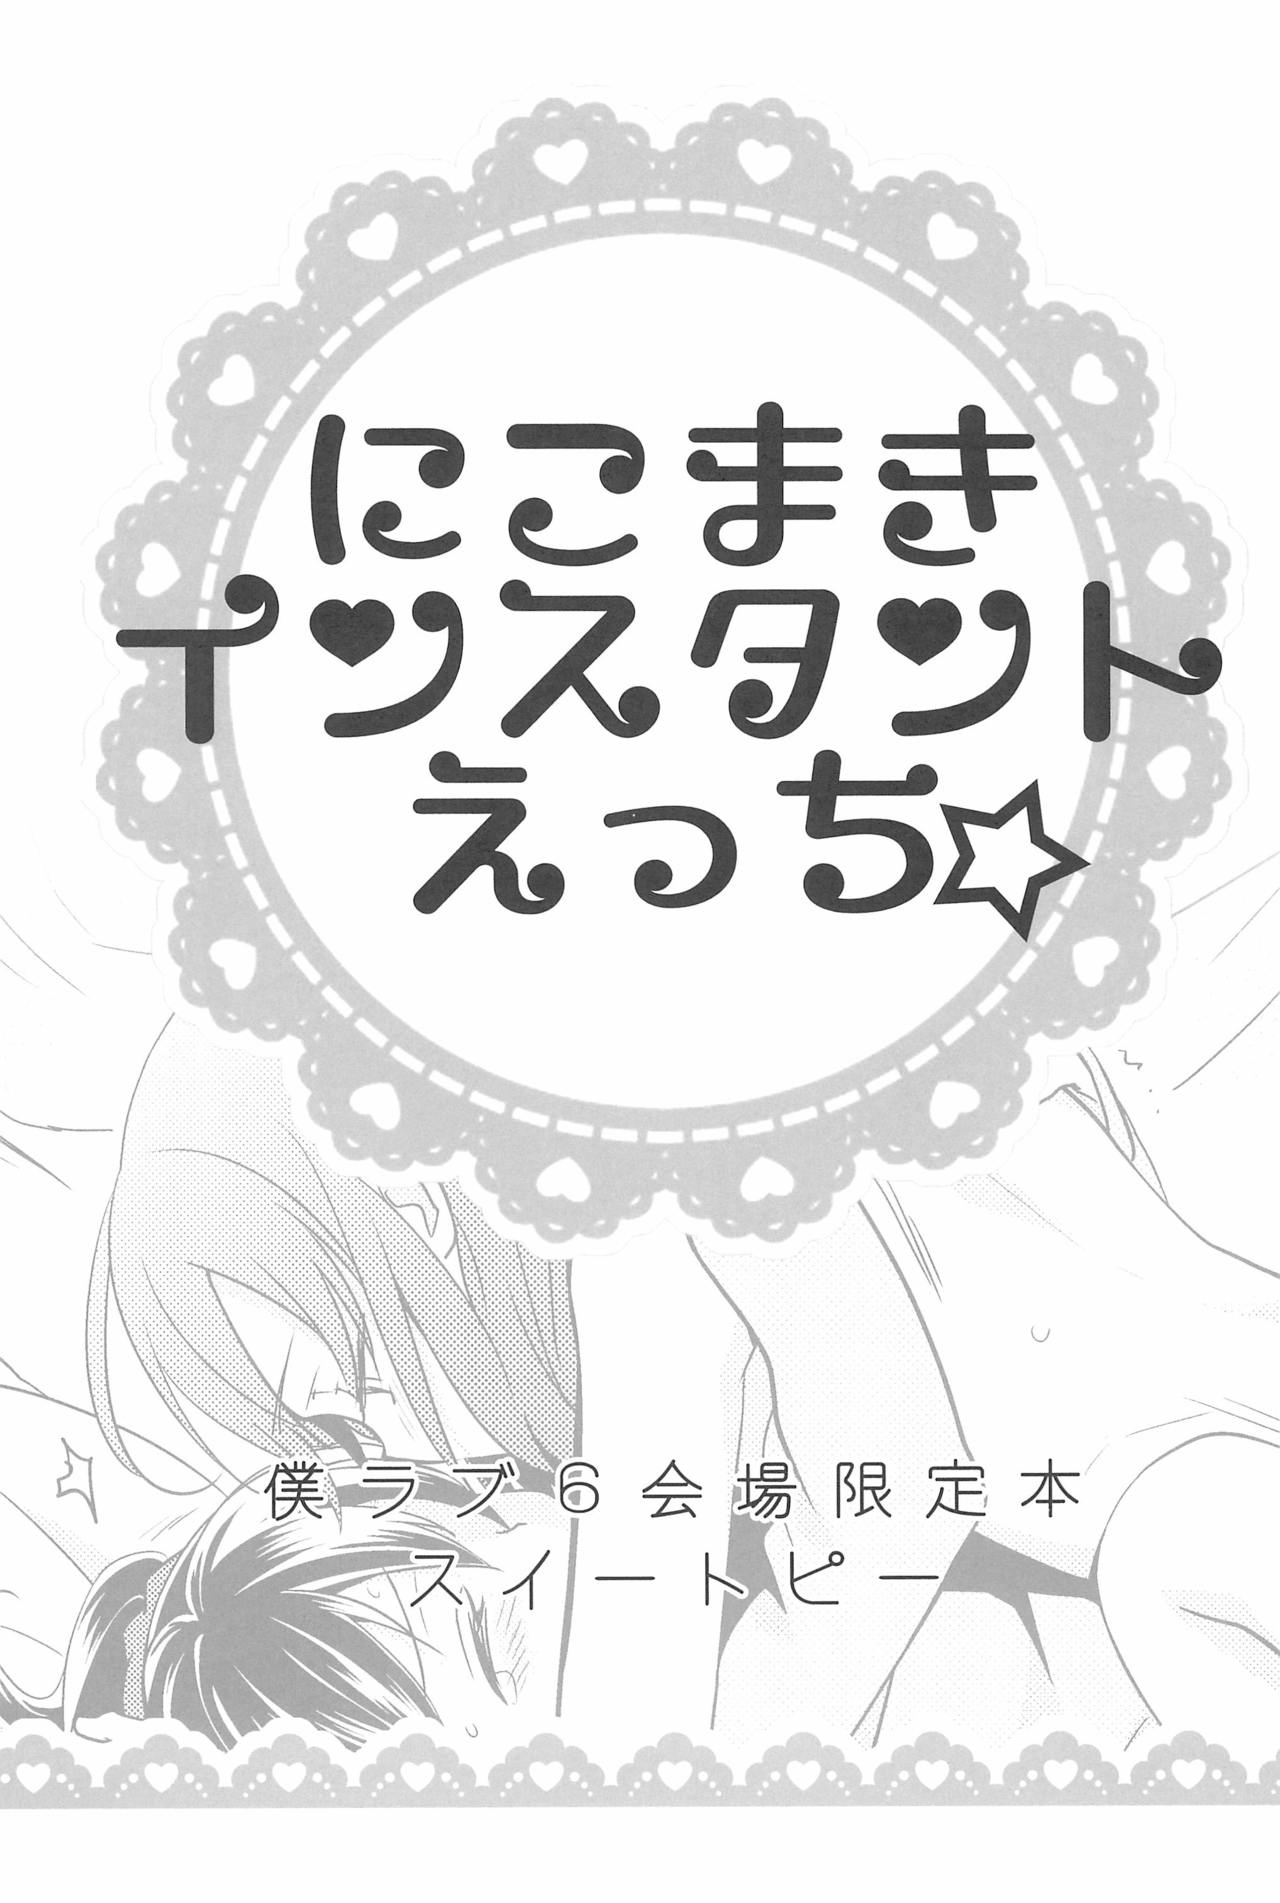 (C90) [Sweet Pea (Ooshima Tomo)] NICO & MAKI COLLECTION 3 (Love Live!) (C90) [スイートピー (大島智)] NICO & MAKI COLLECTION 3 (ラブライブ!)